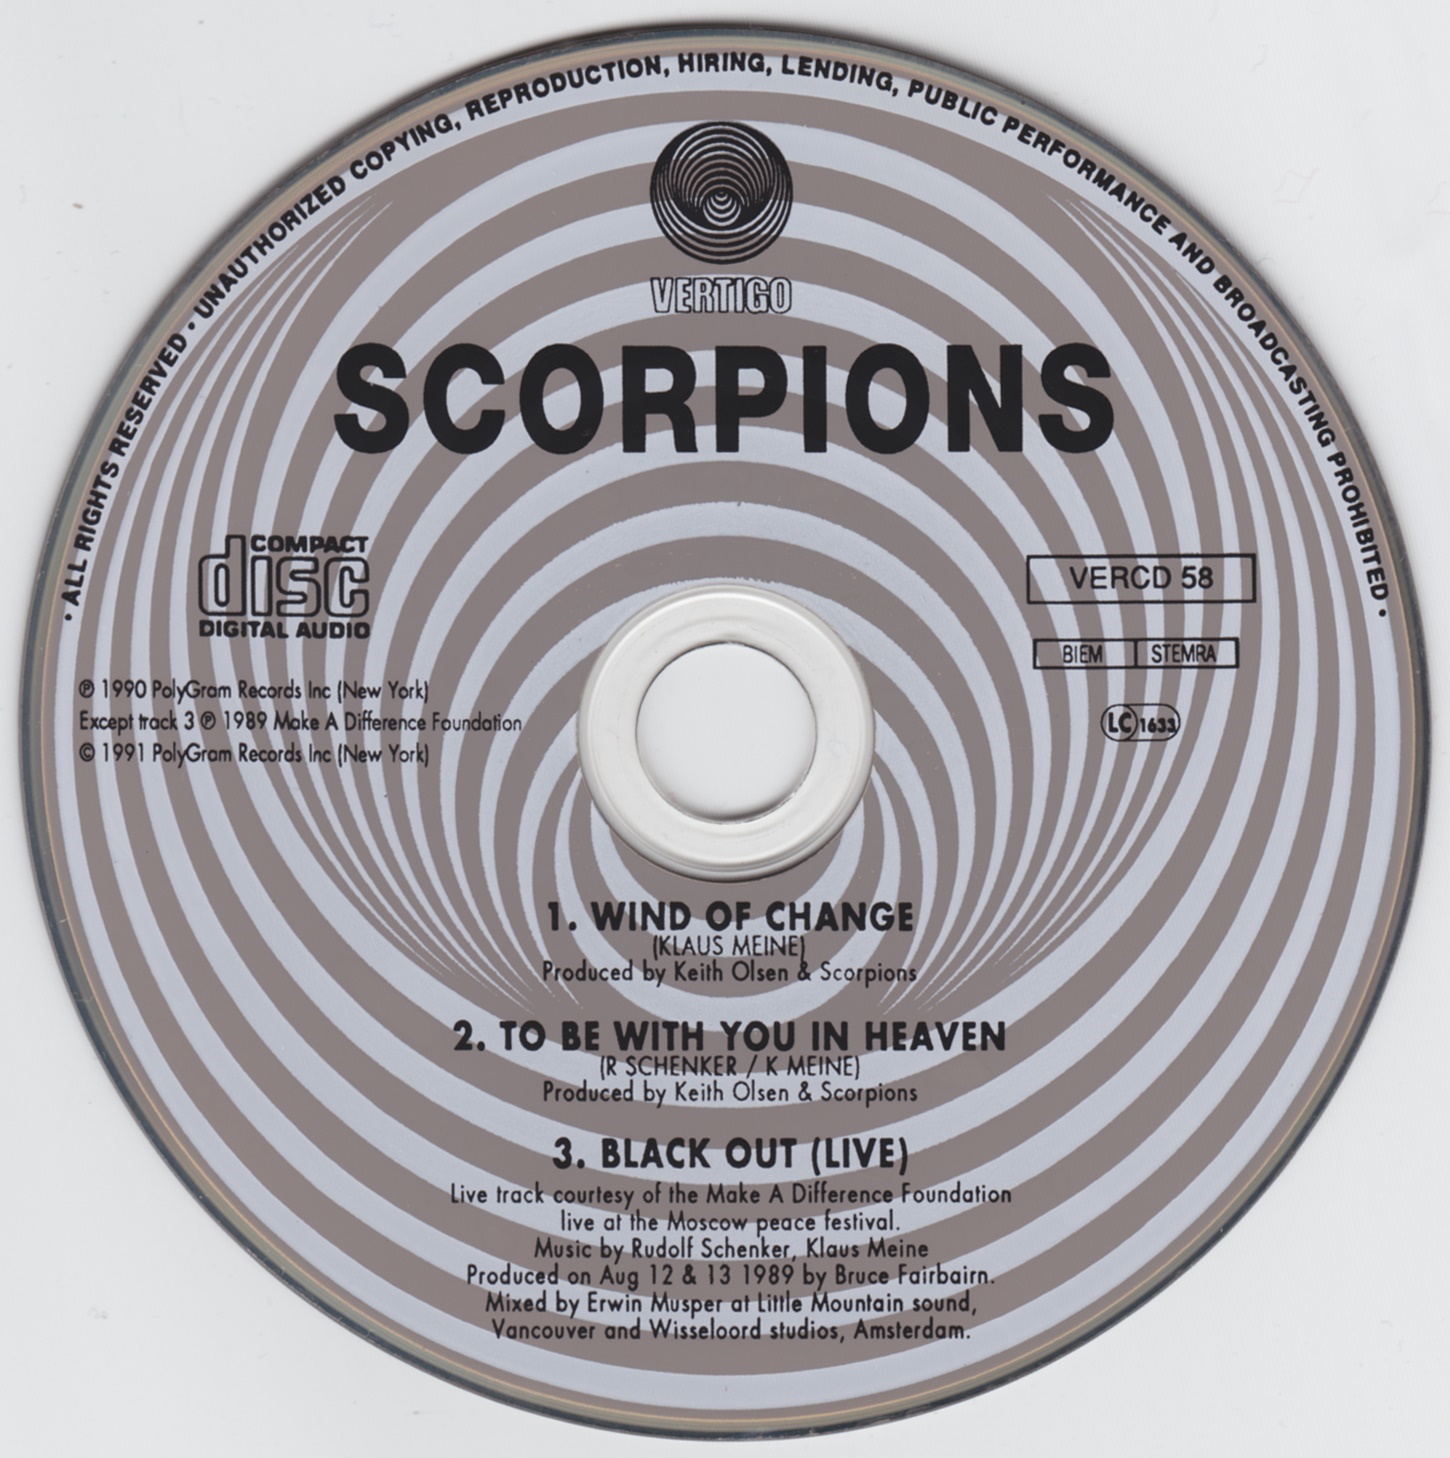 Scorpions flac. Scorpions Wind of change. Scorpions ветер перемен. Scorpions_Wind of change (1990). Скорпионс 1991.